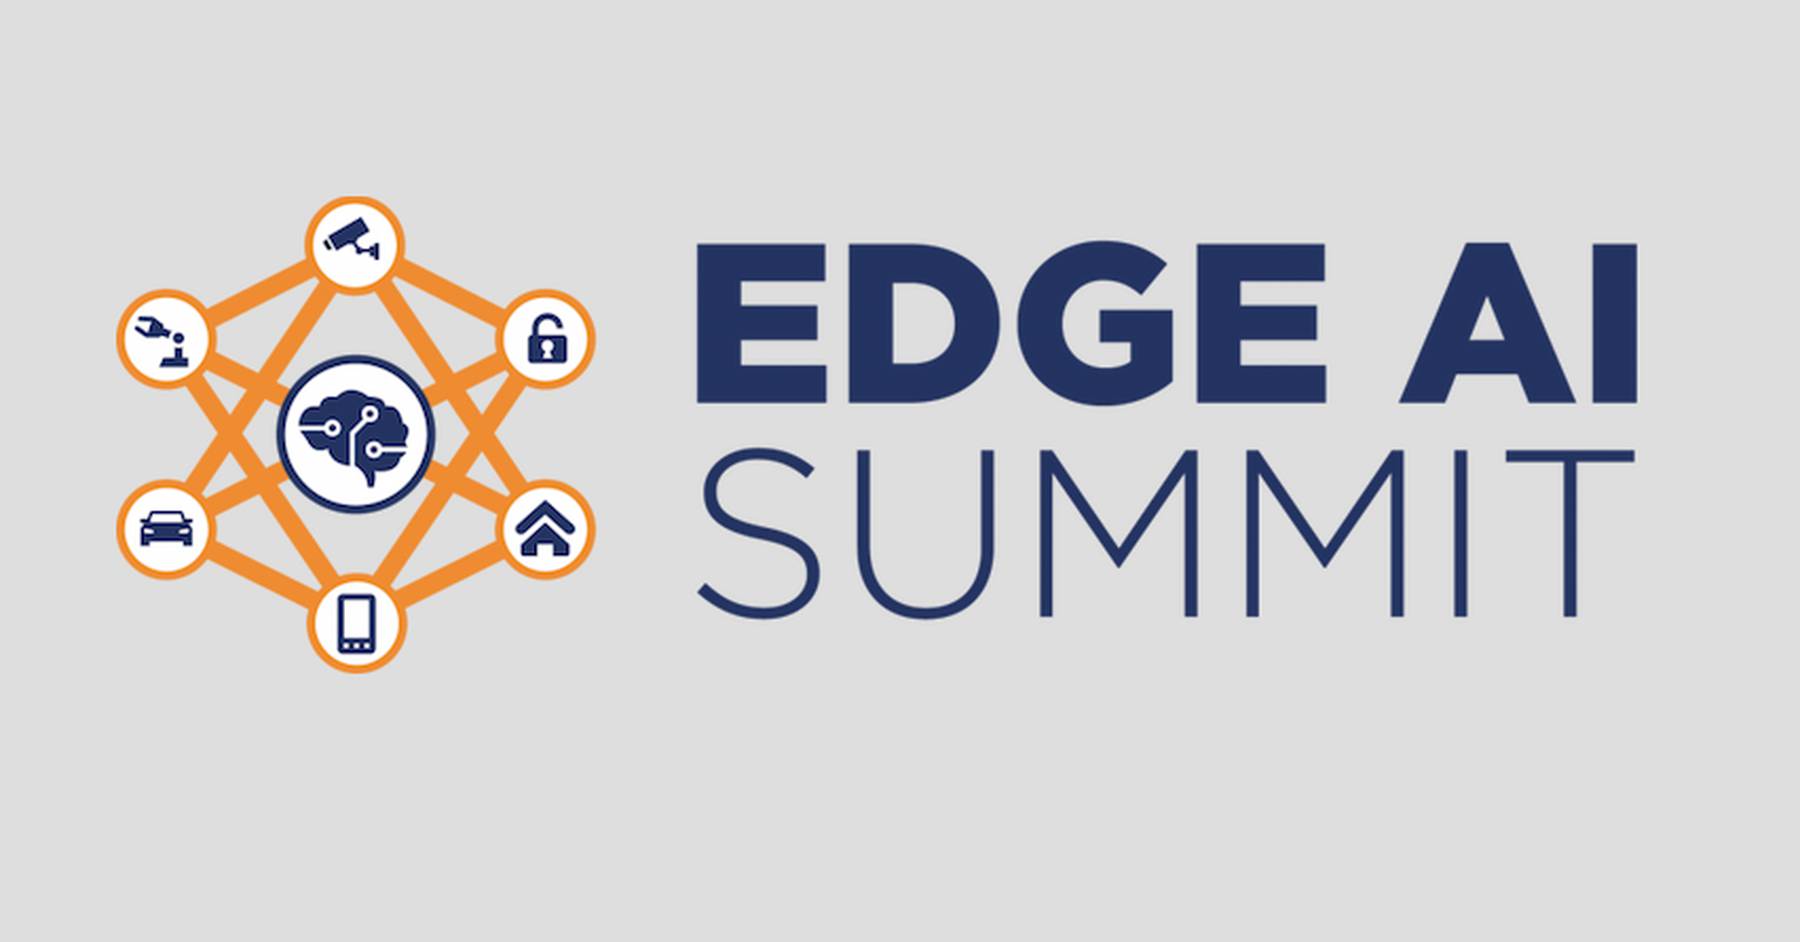 Edge AI Summit 2020